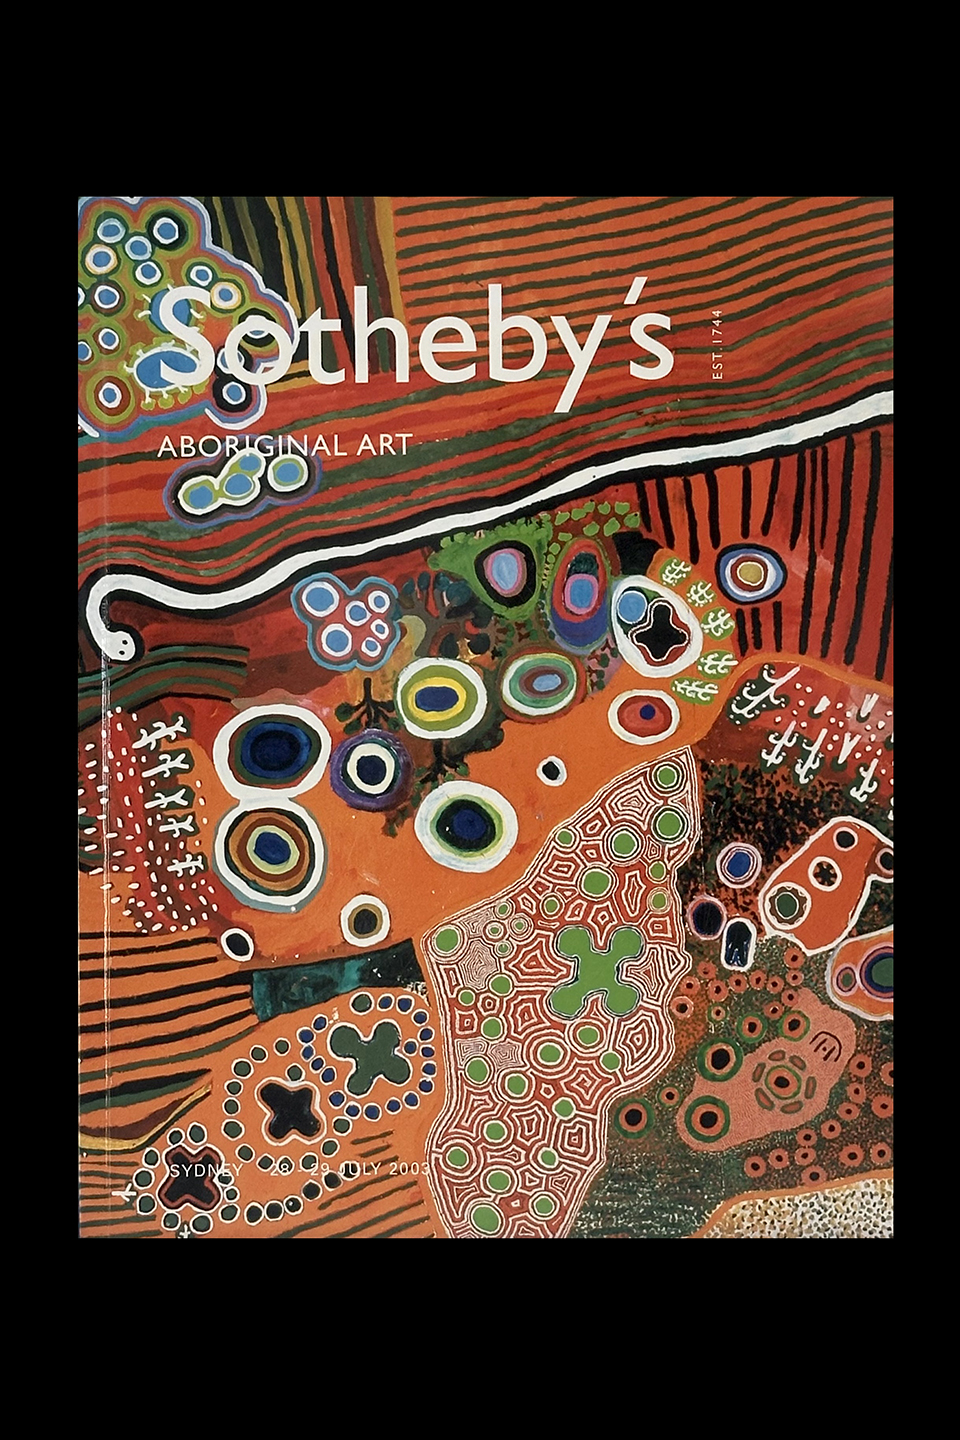 Sotheby's - Aboriginal Art, Sydney, July 2003